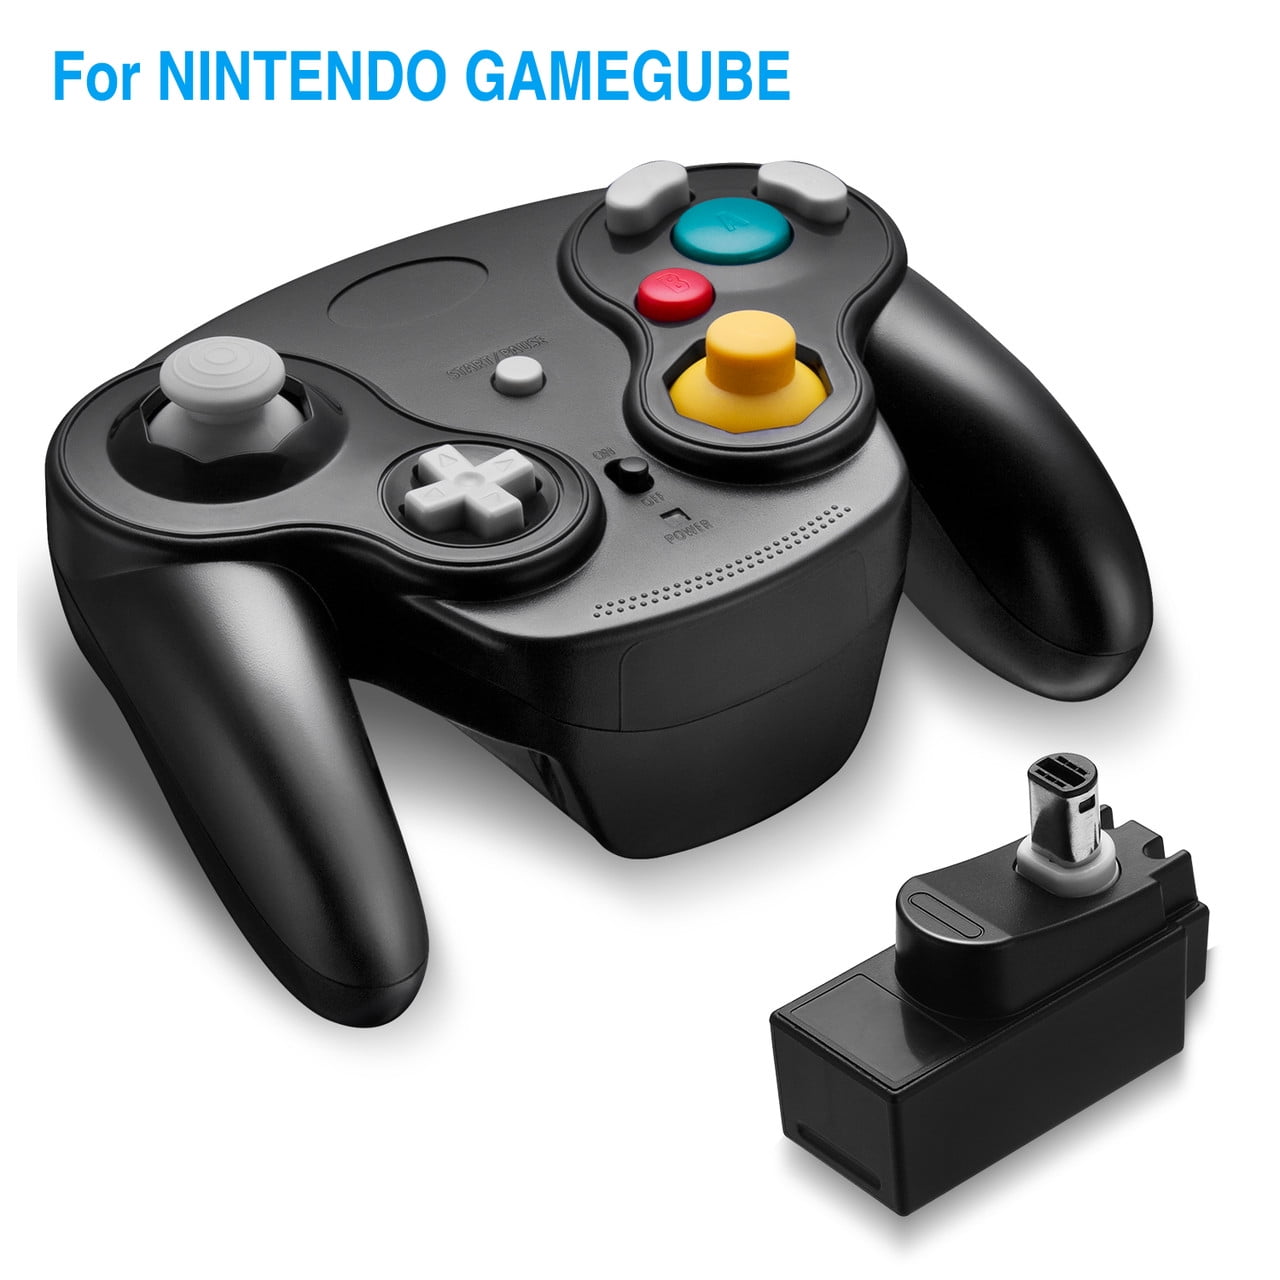 Rondlopen Bij naam beha Poweradd 2.4G Wireless Gamepad for Nintendo Gamecube NGC Wii Video Game  Console with Receiver - Walmart.com